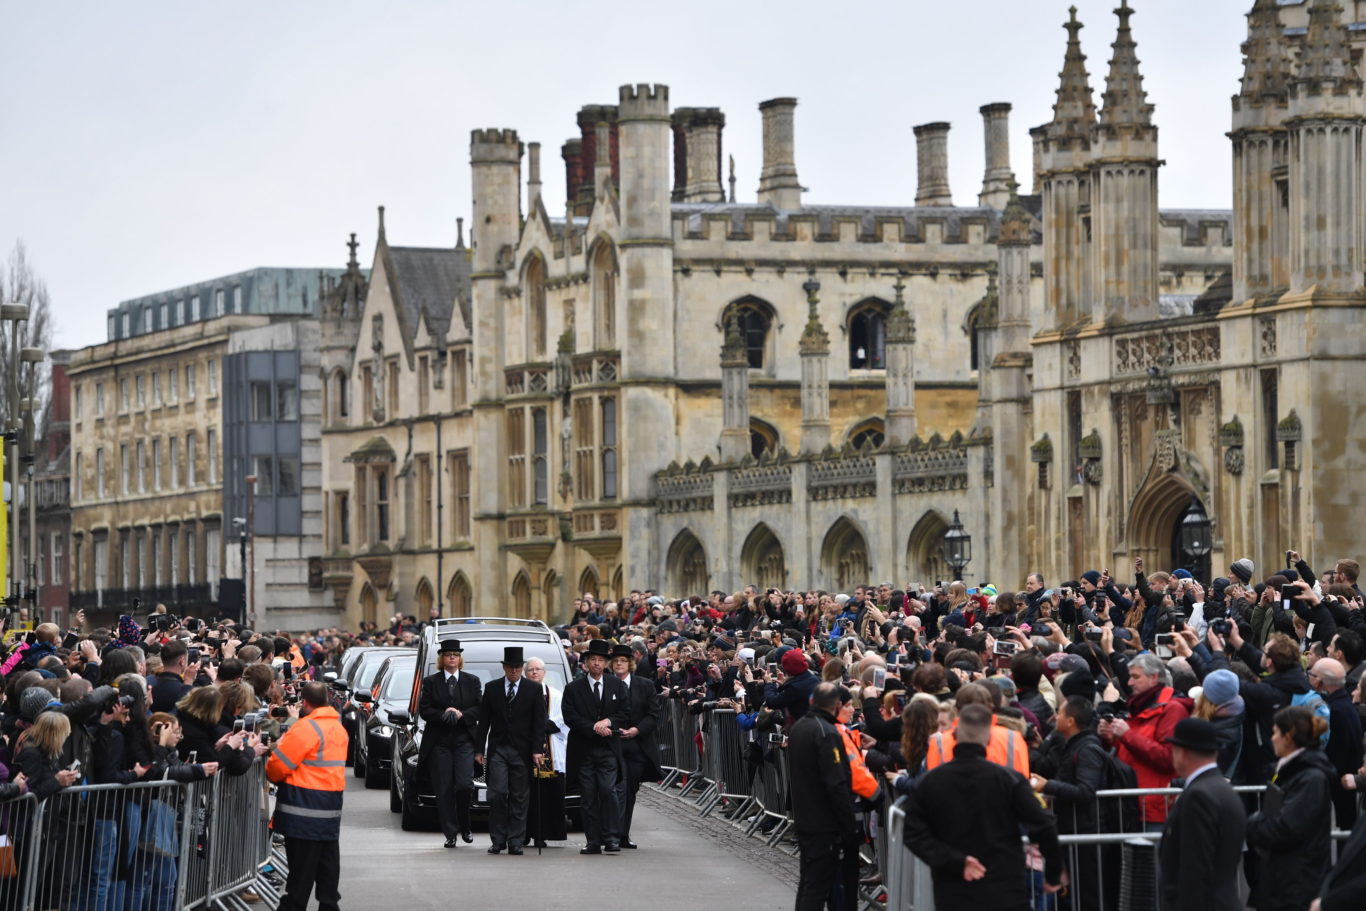 Crowds watch as the funeral cortege arrives (Joe Giddens/PA)